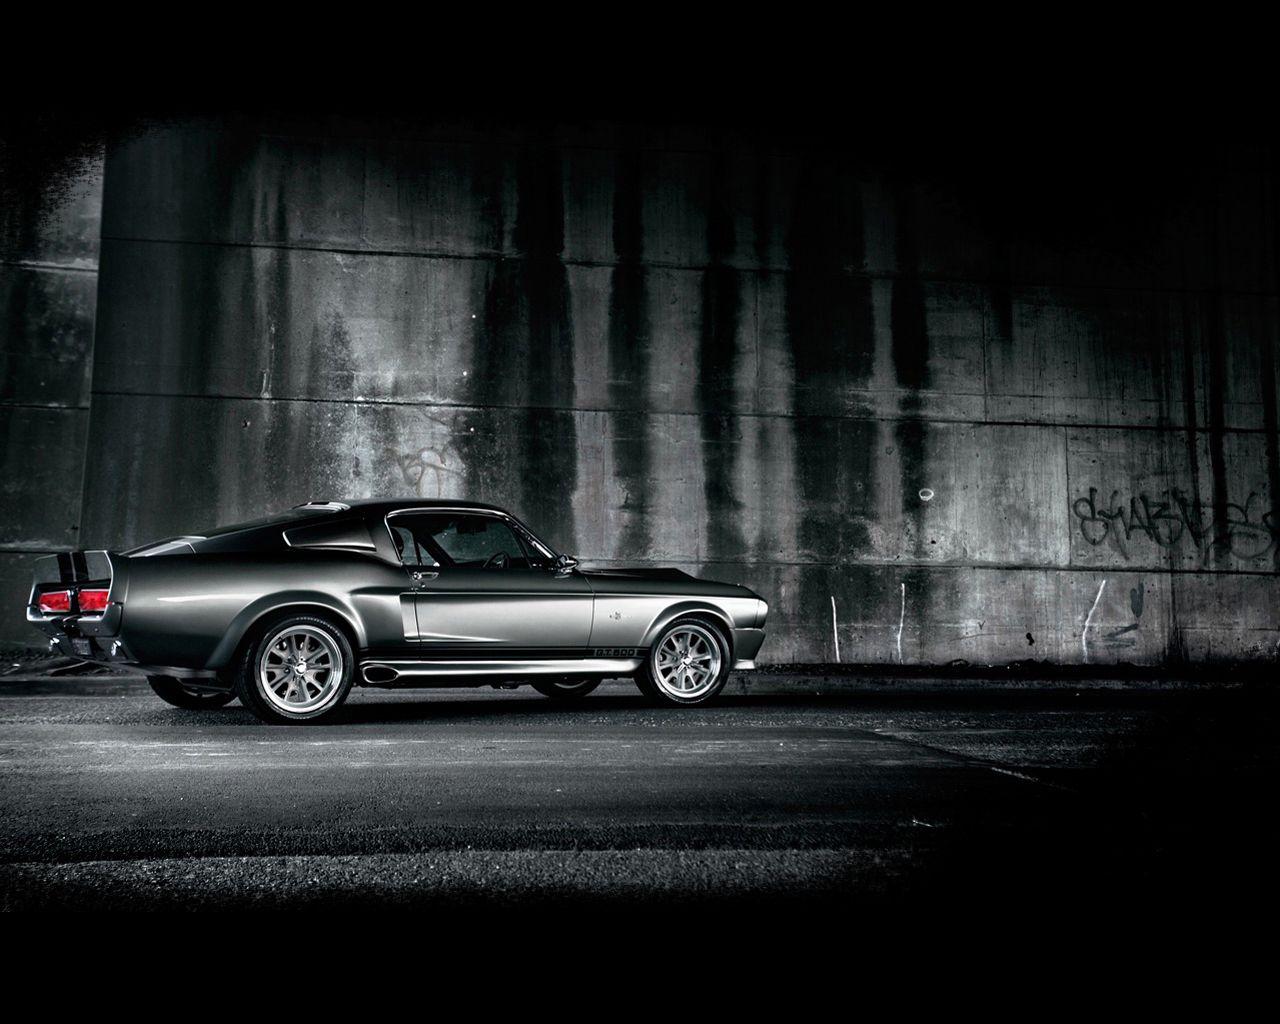 Ford Mustang Gt500 Wallpaper Hd